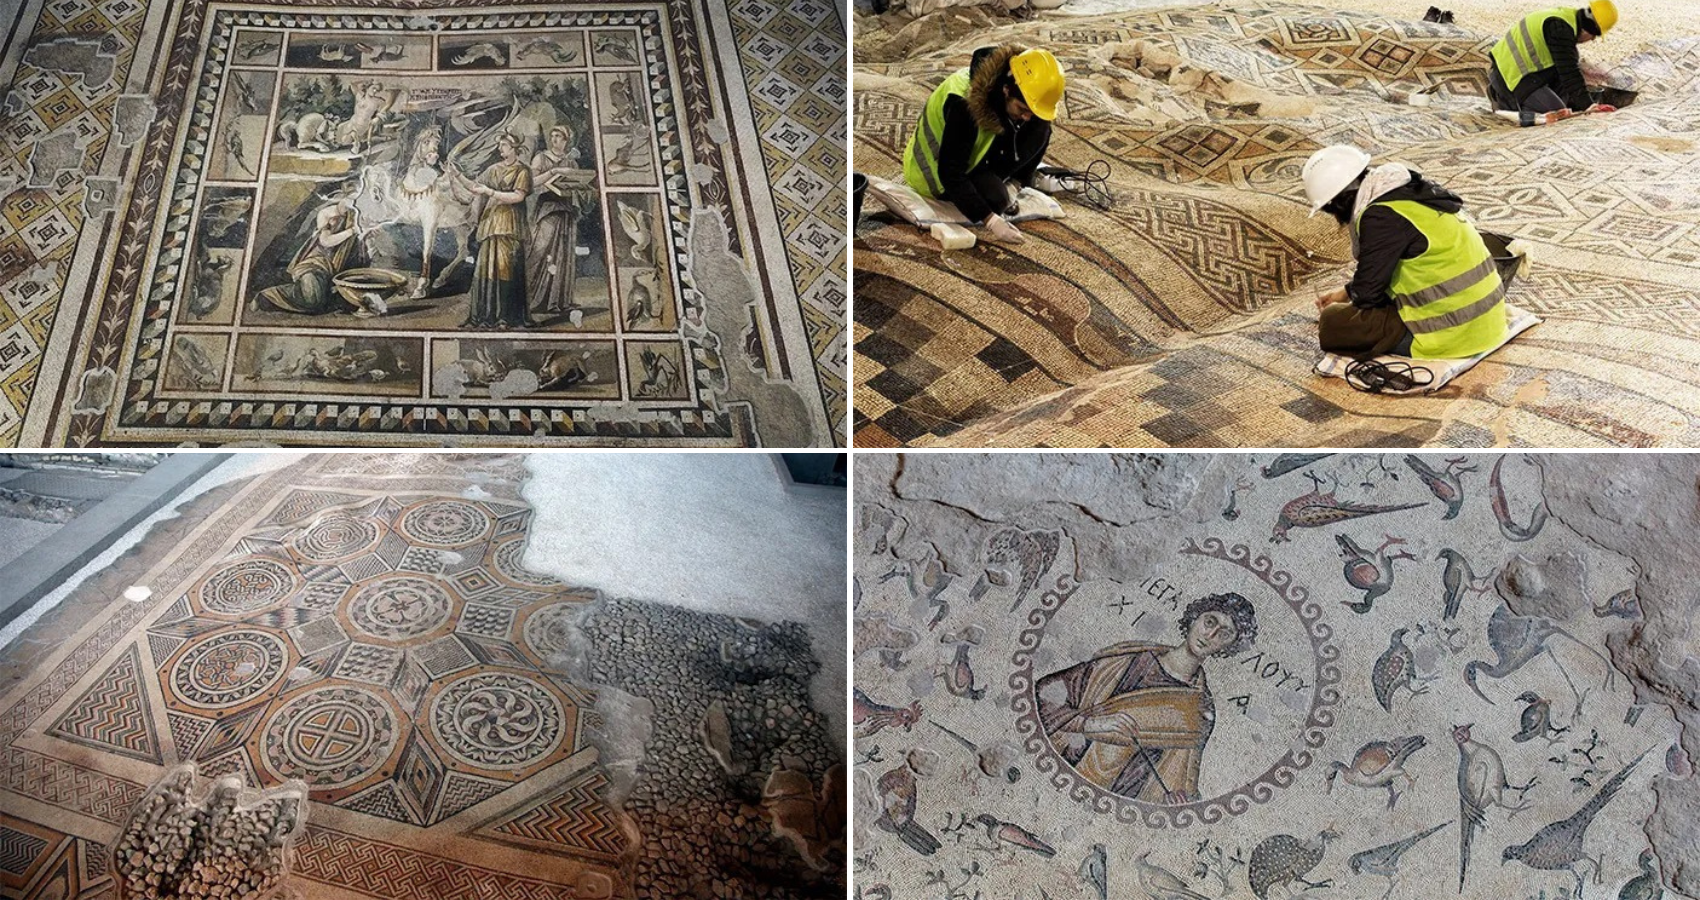 Discovering Roman mosaics